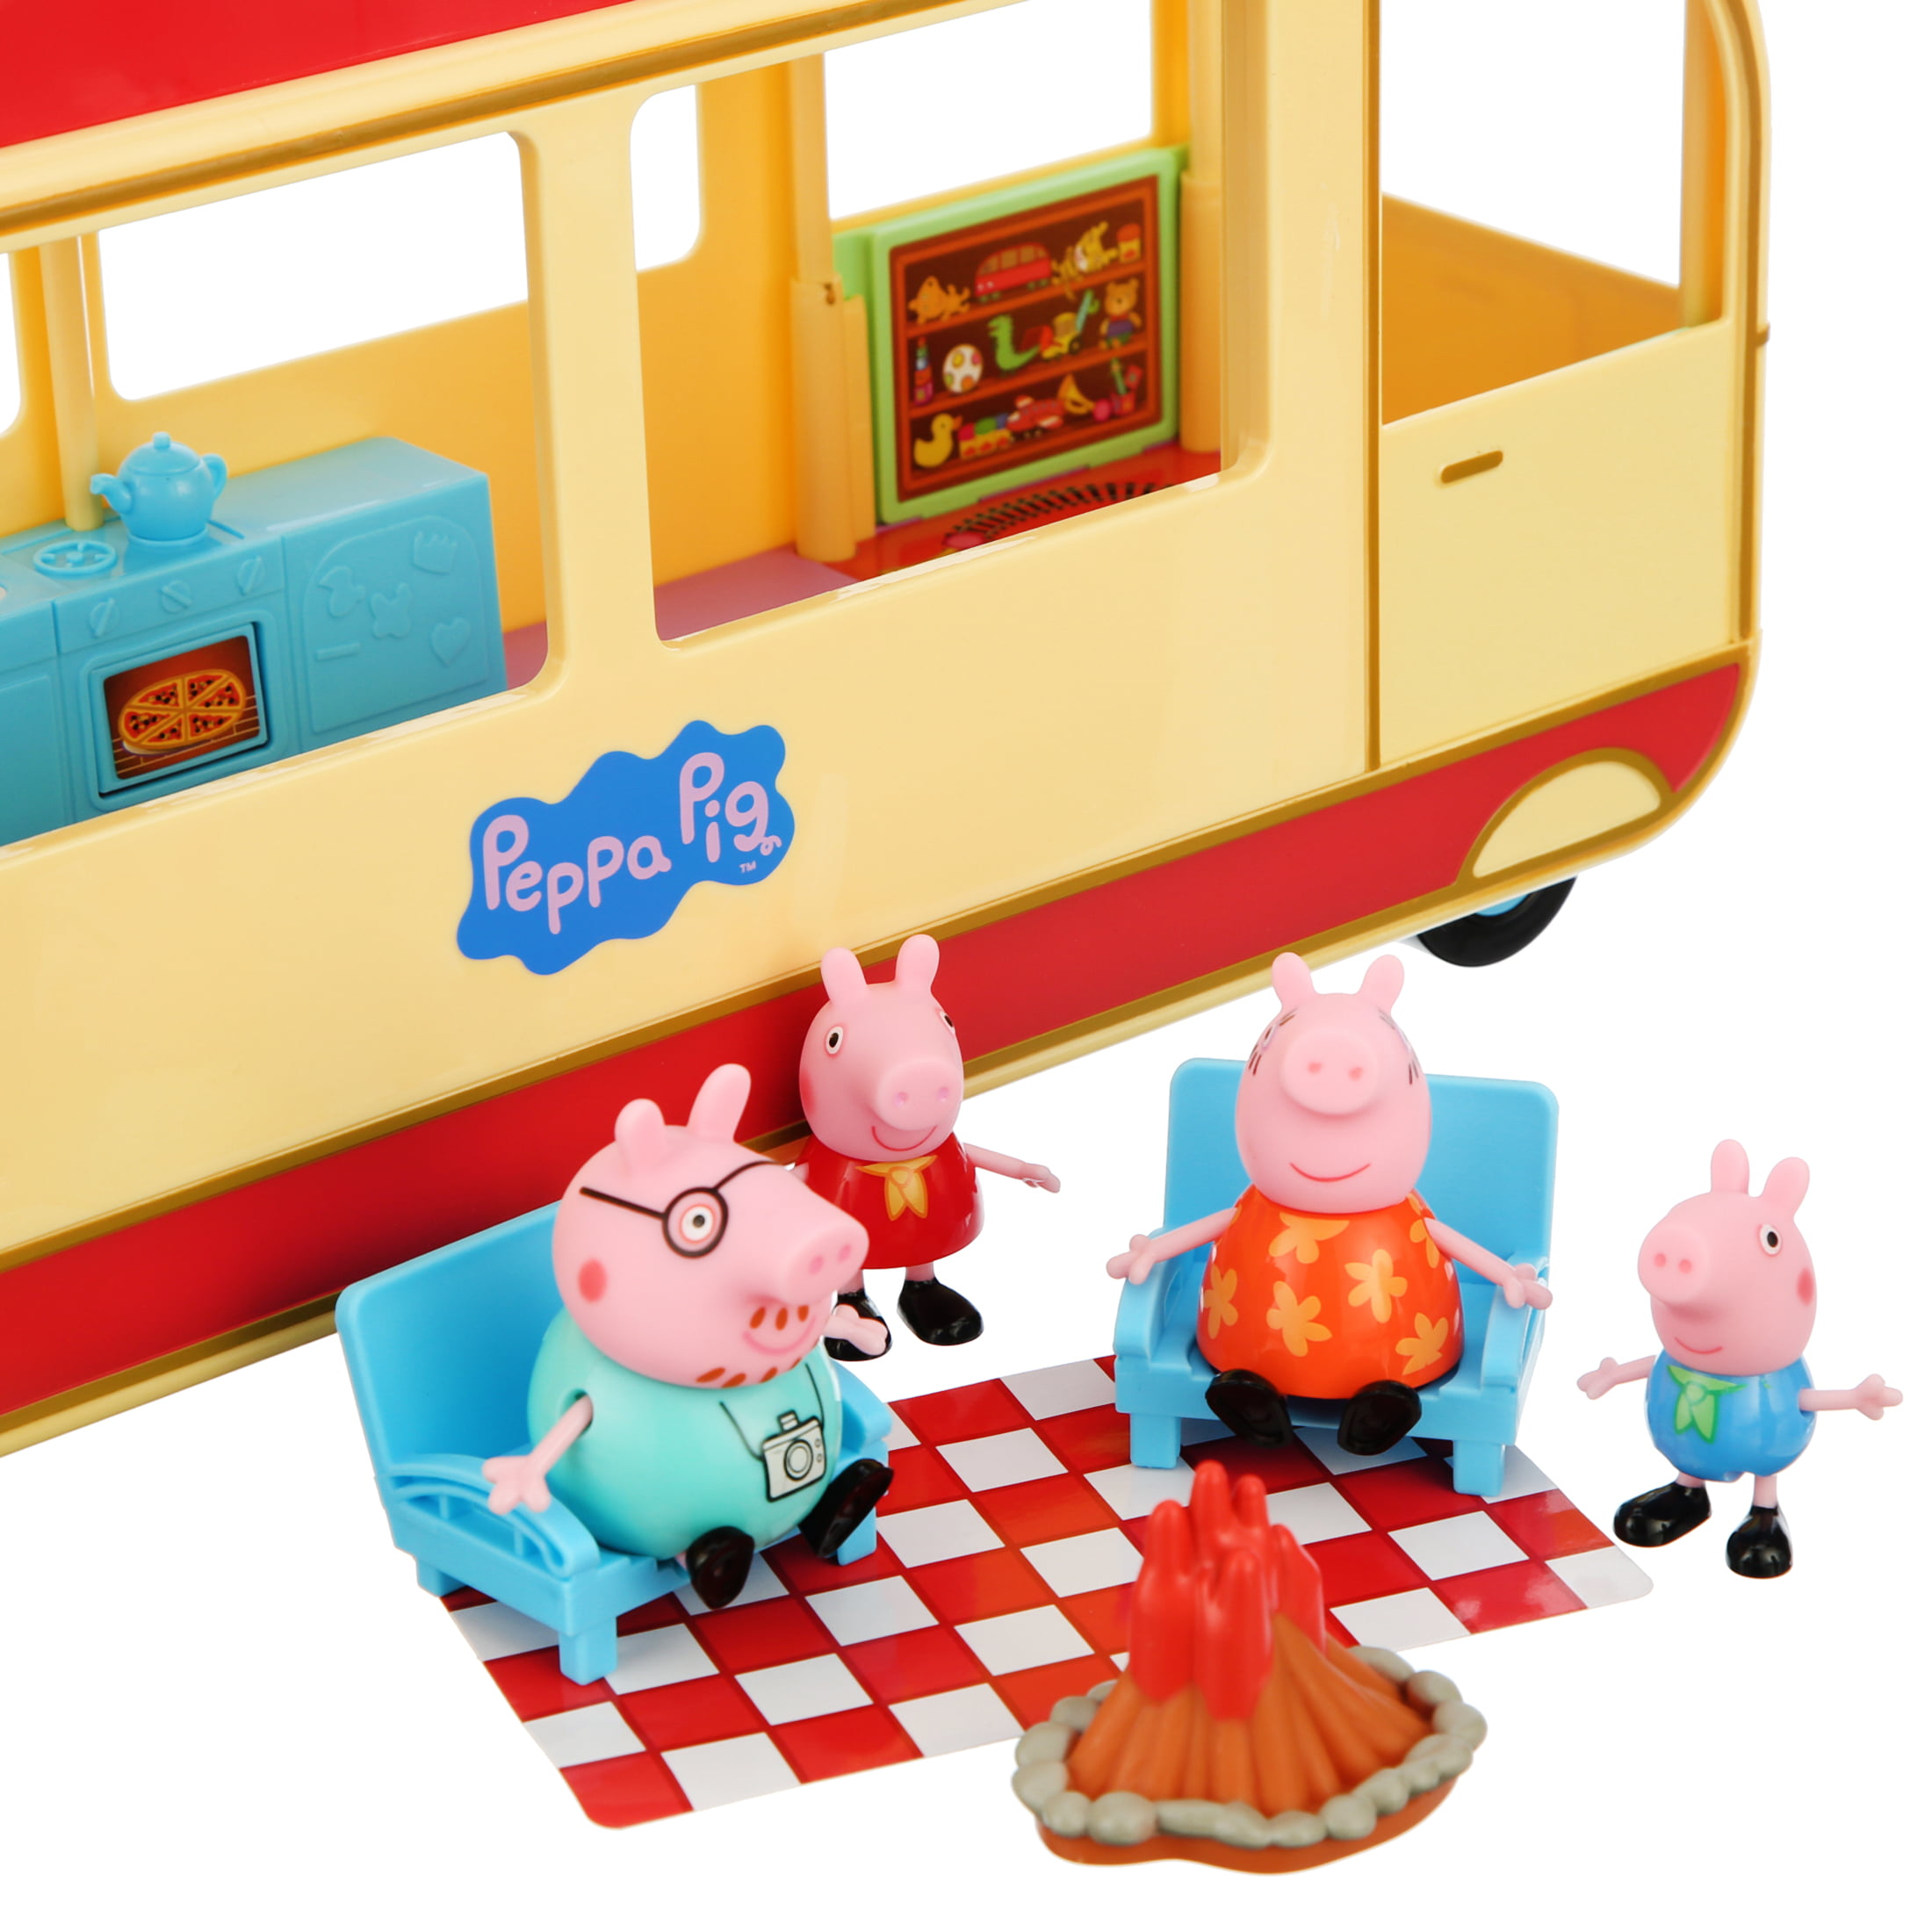 Peppa Pig's Transforming Campervan Feature Playset